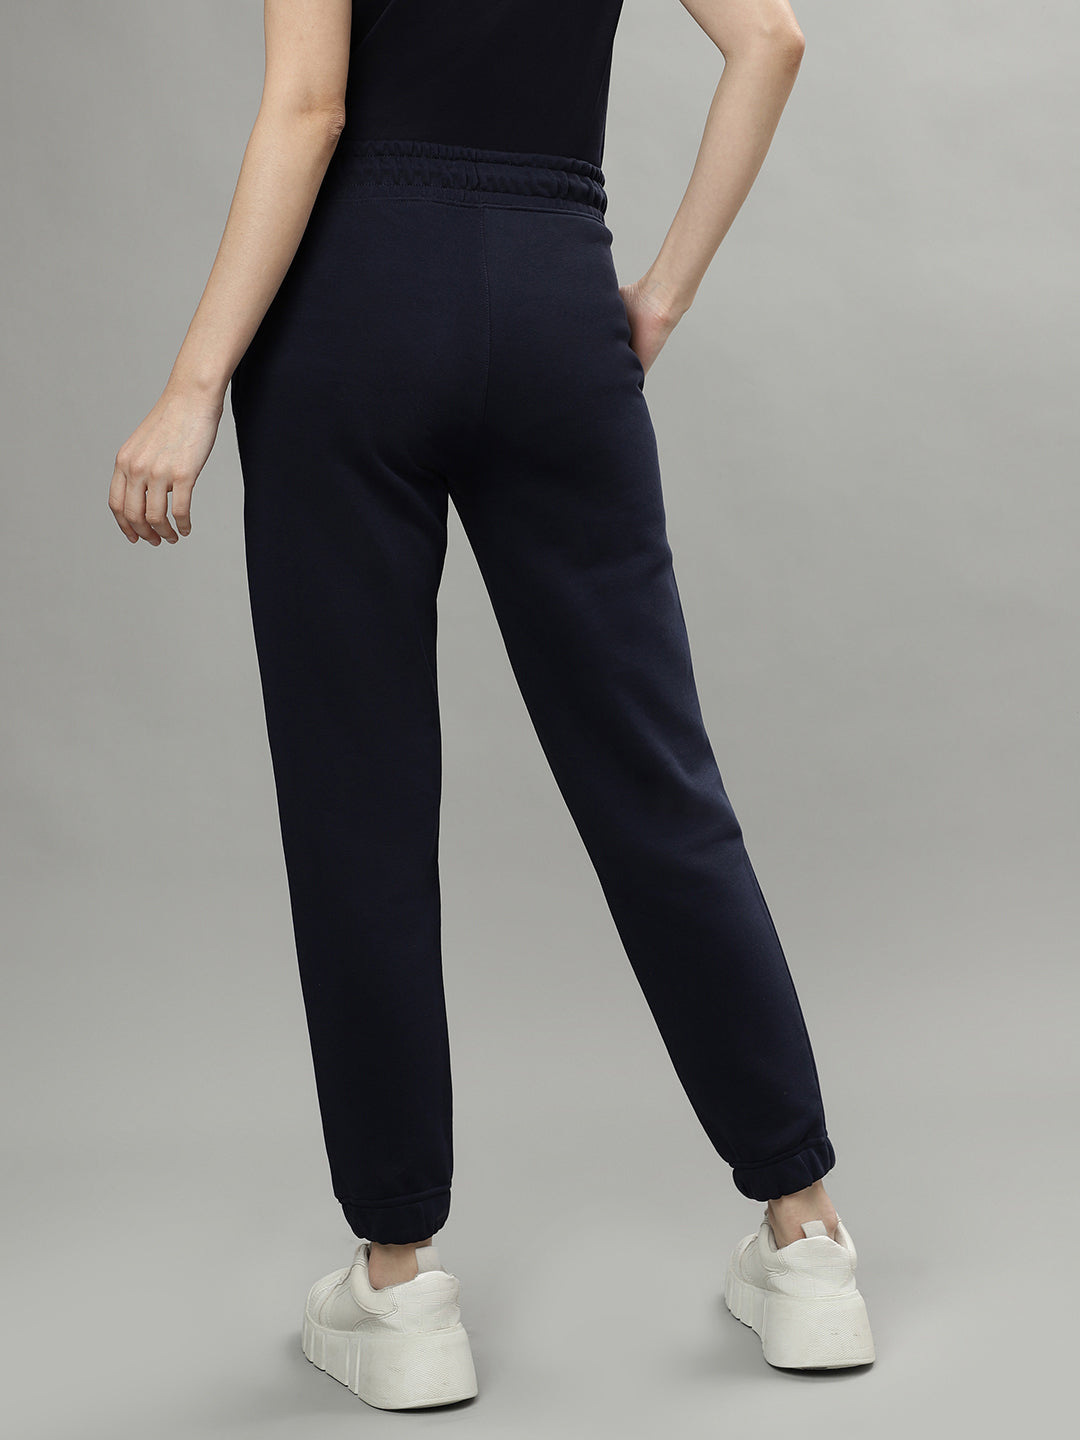 LEEy-World Sweatpants Women Women's Elegant High Waist Button